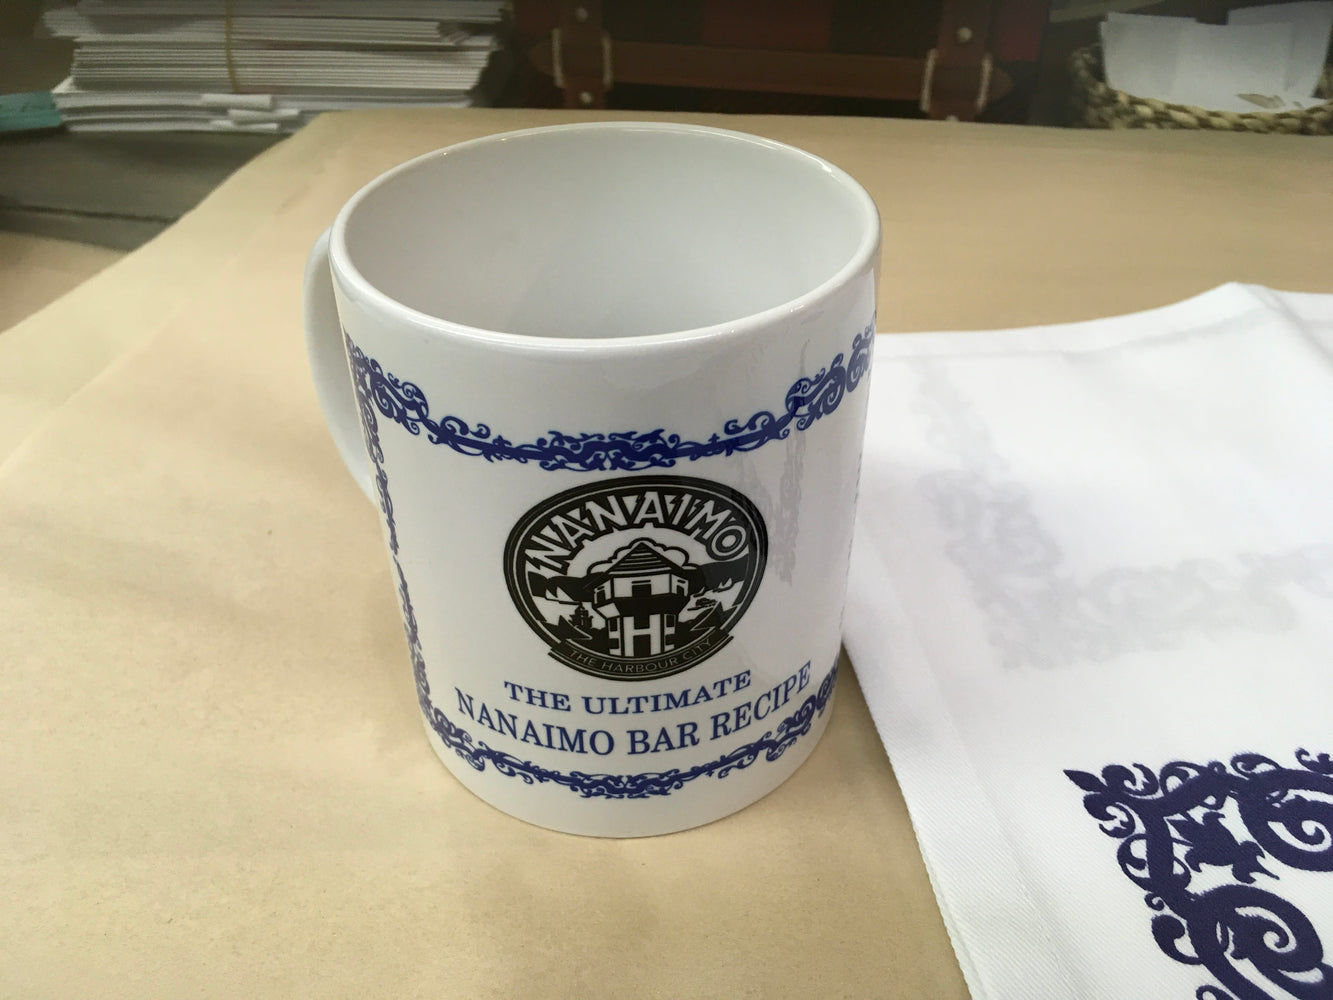 Nanaimo bar recipe mug